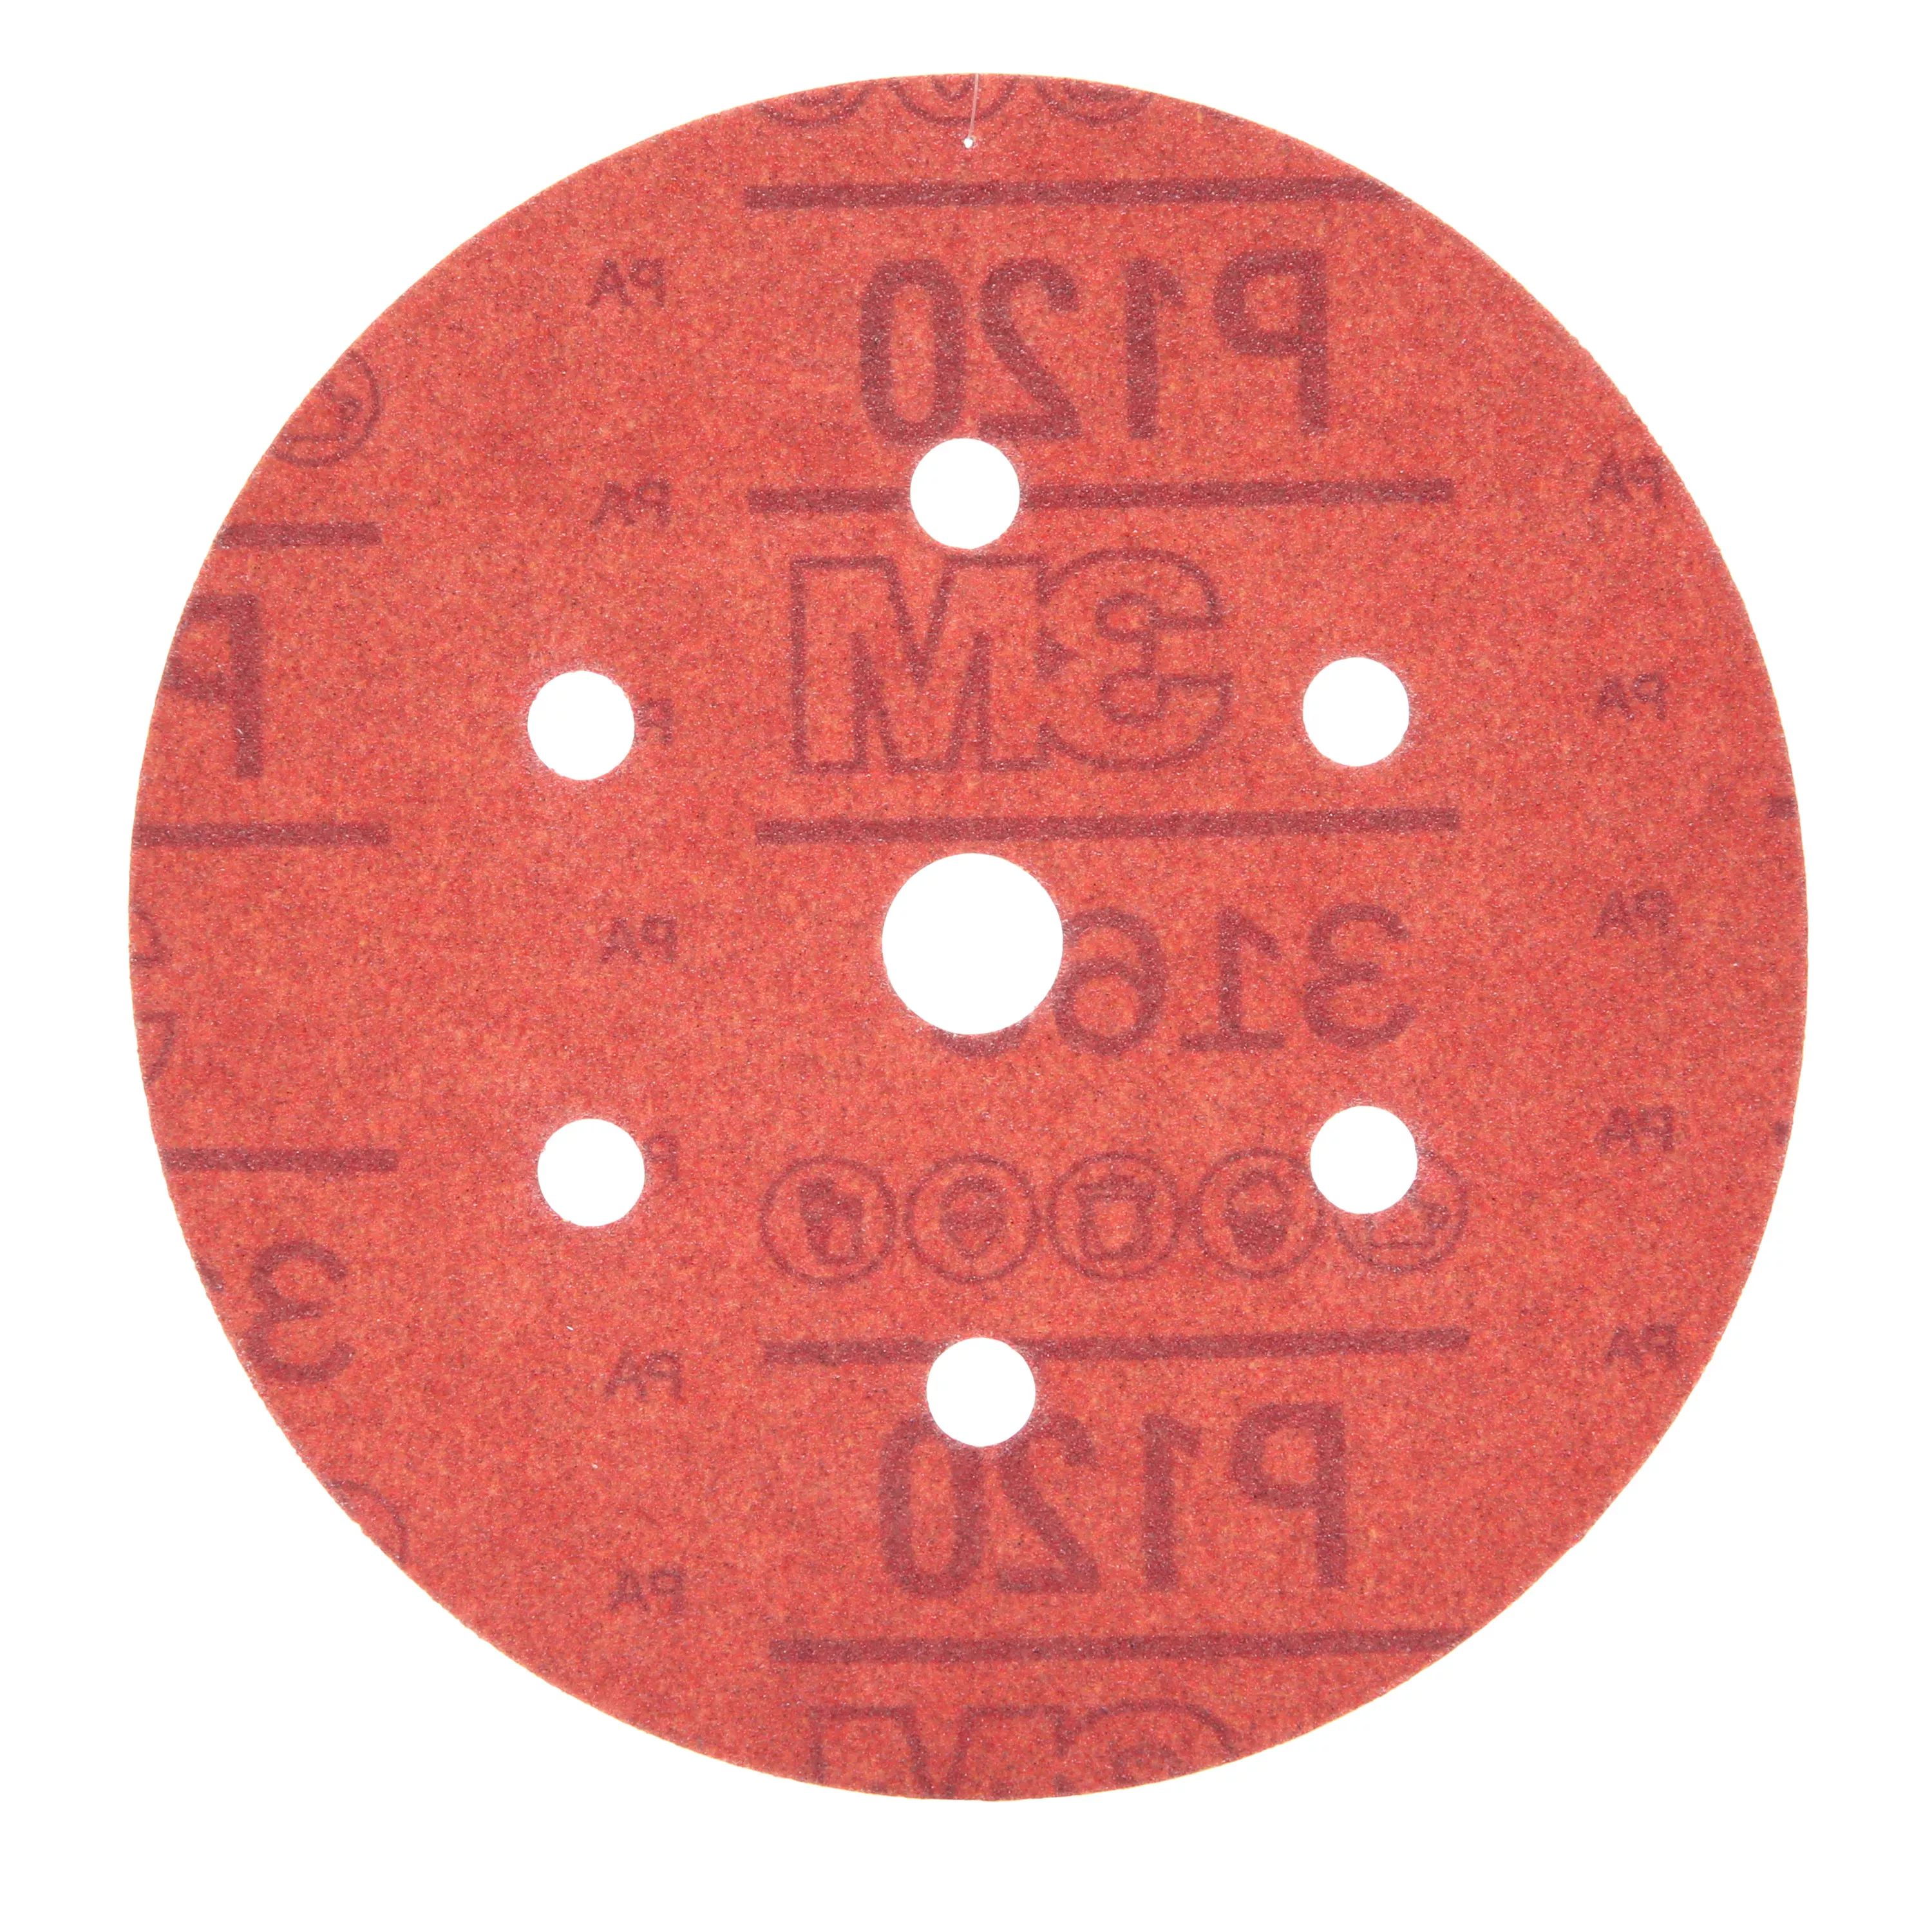 SKU 7000028268 | 3M™ Hookit™ Red Abrasive Disc Dust Free